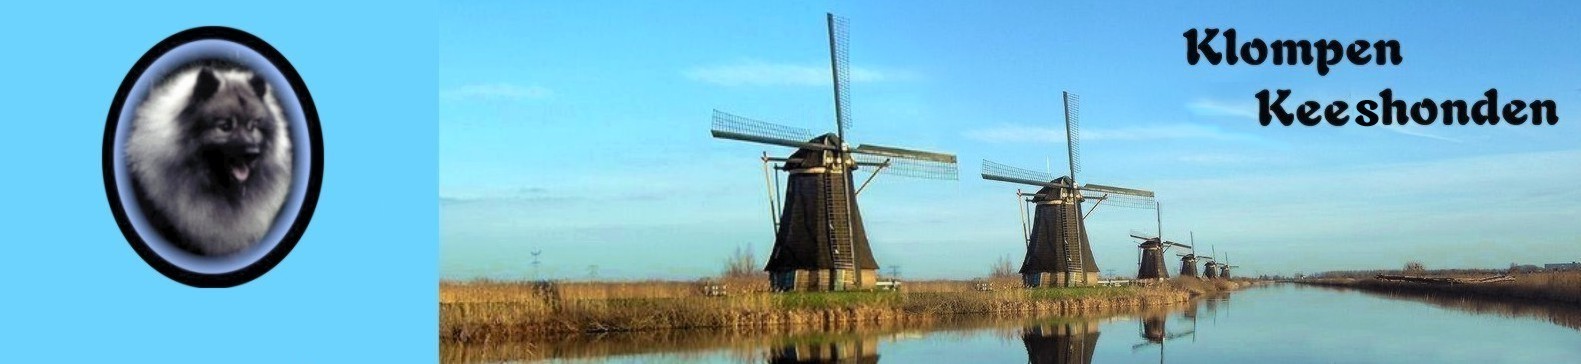 row of windmills found in Kinderdijk, Holland